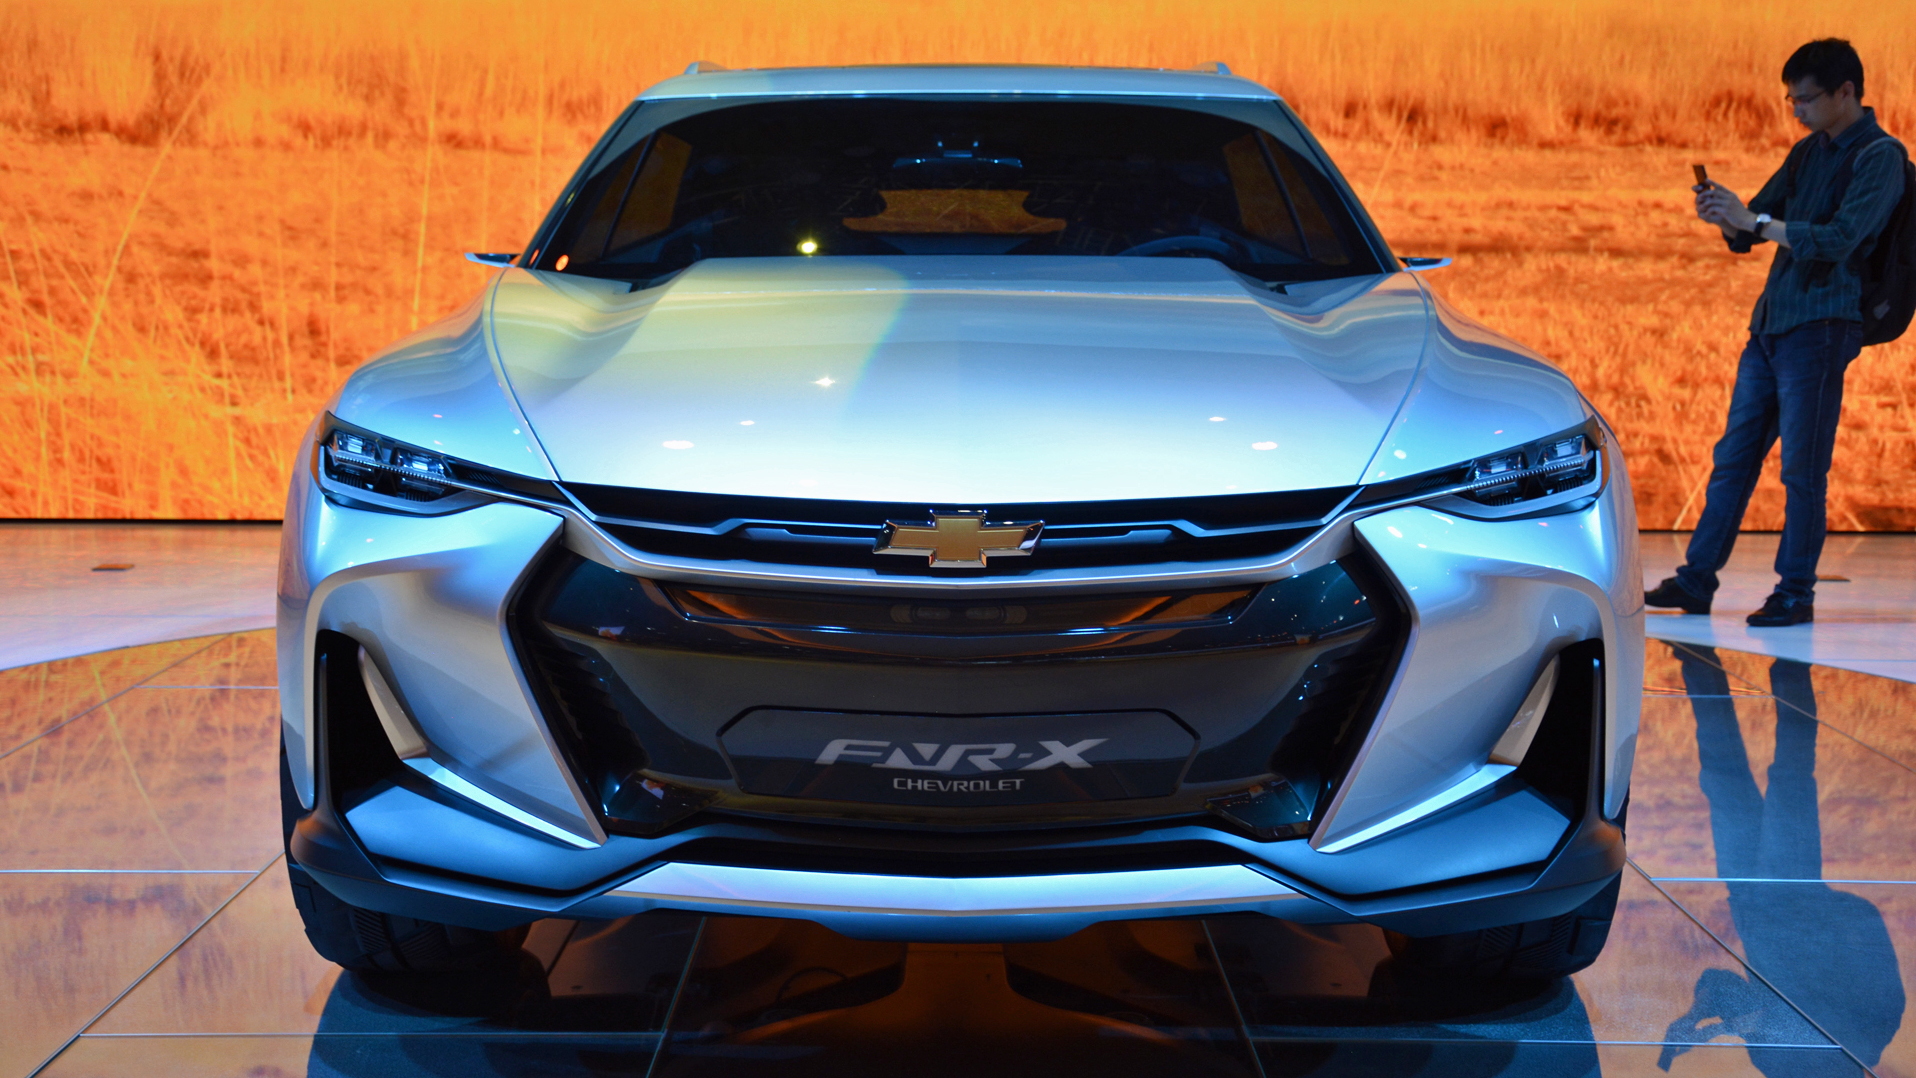 Chevrolet FNR-X Concept for plug-in hybrid crossover, 2017 Shanghai auto show   [photo: Ronan Glon]